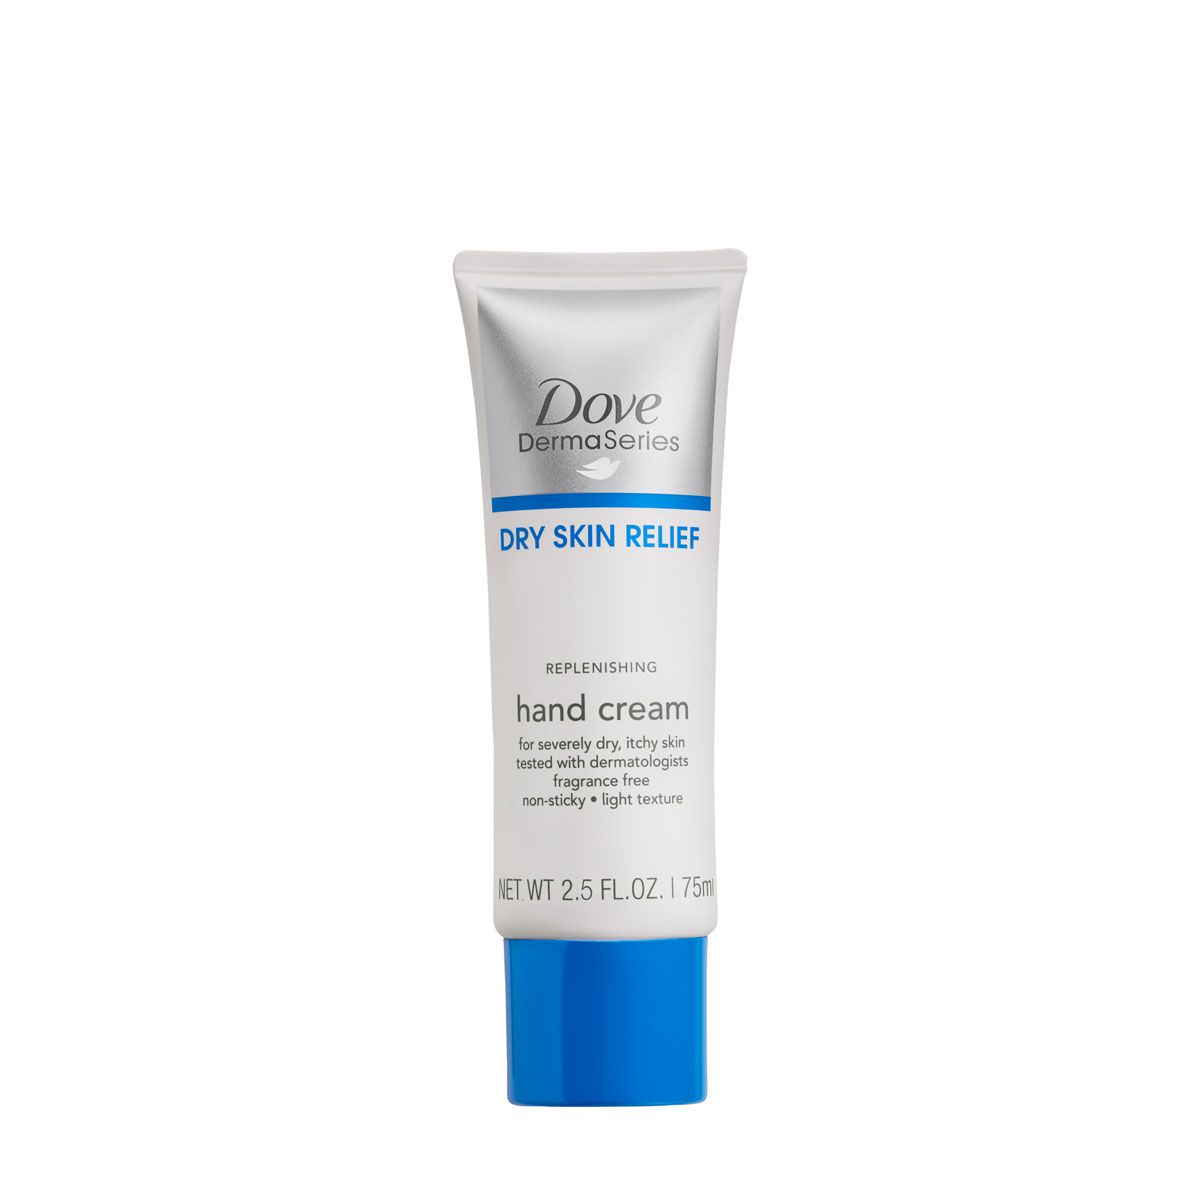 Dove DermaSeries Fragrance-Free Hand Cream for Dry Skin